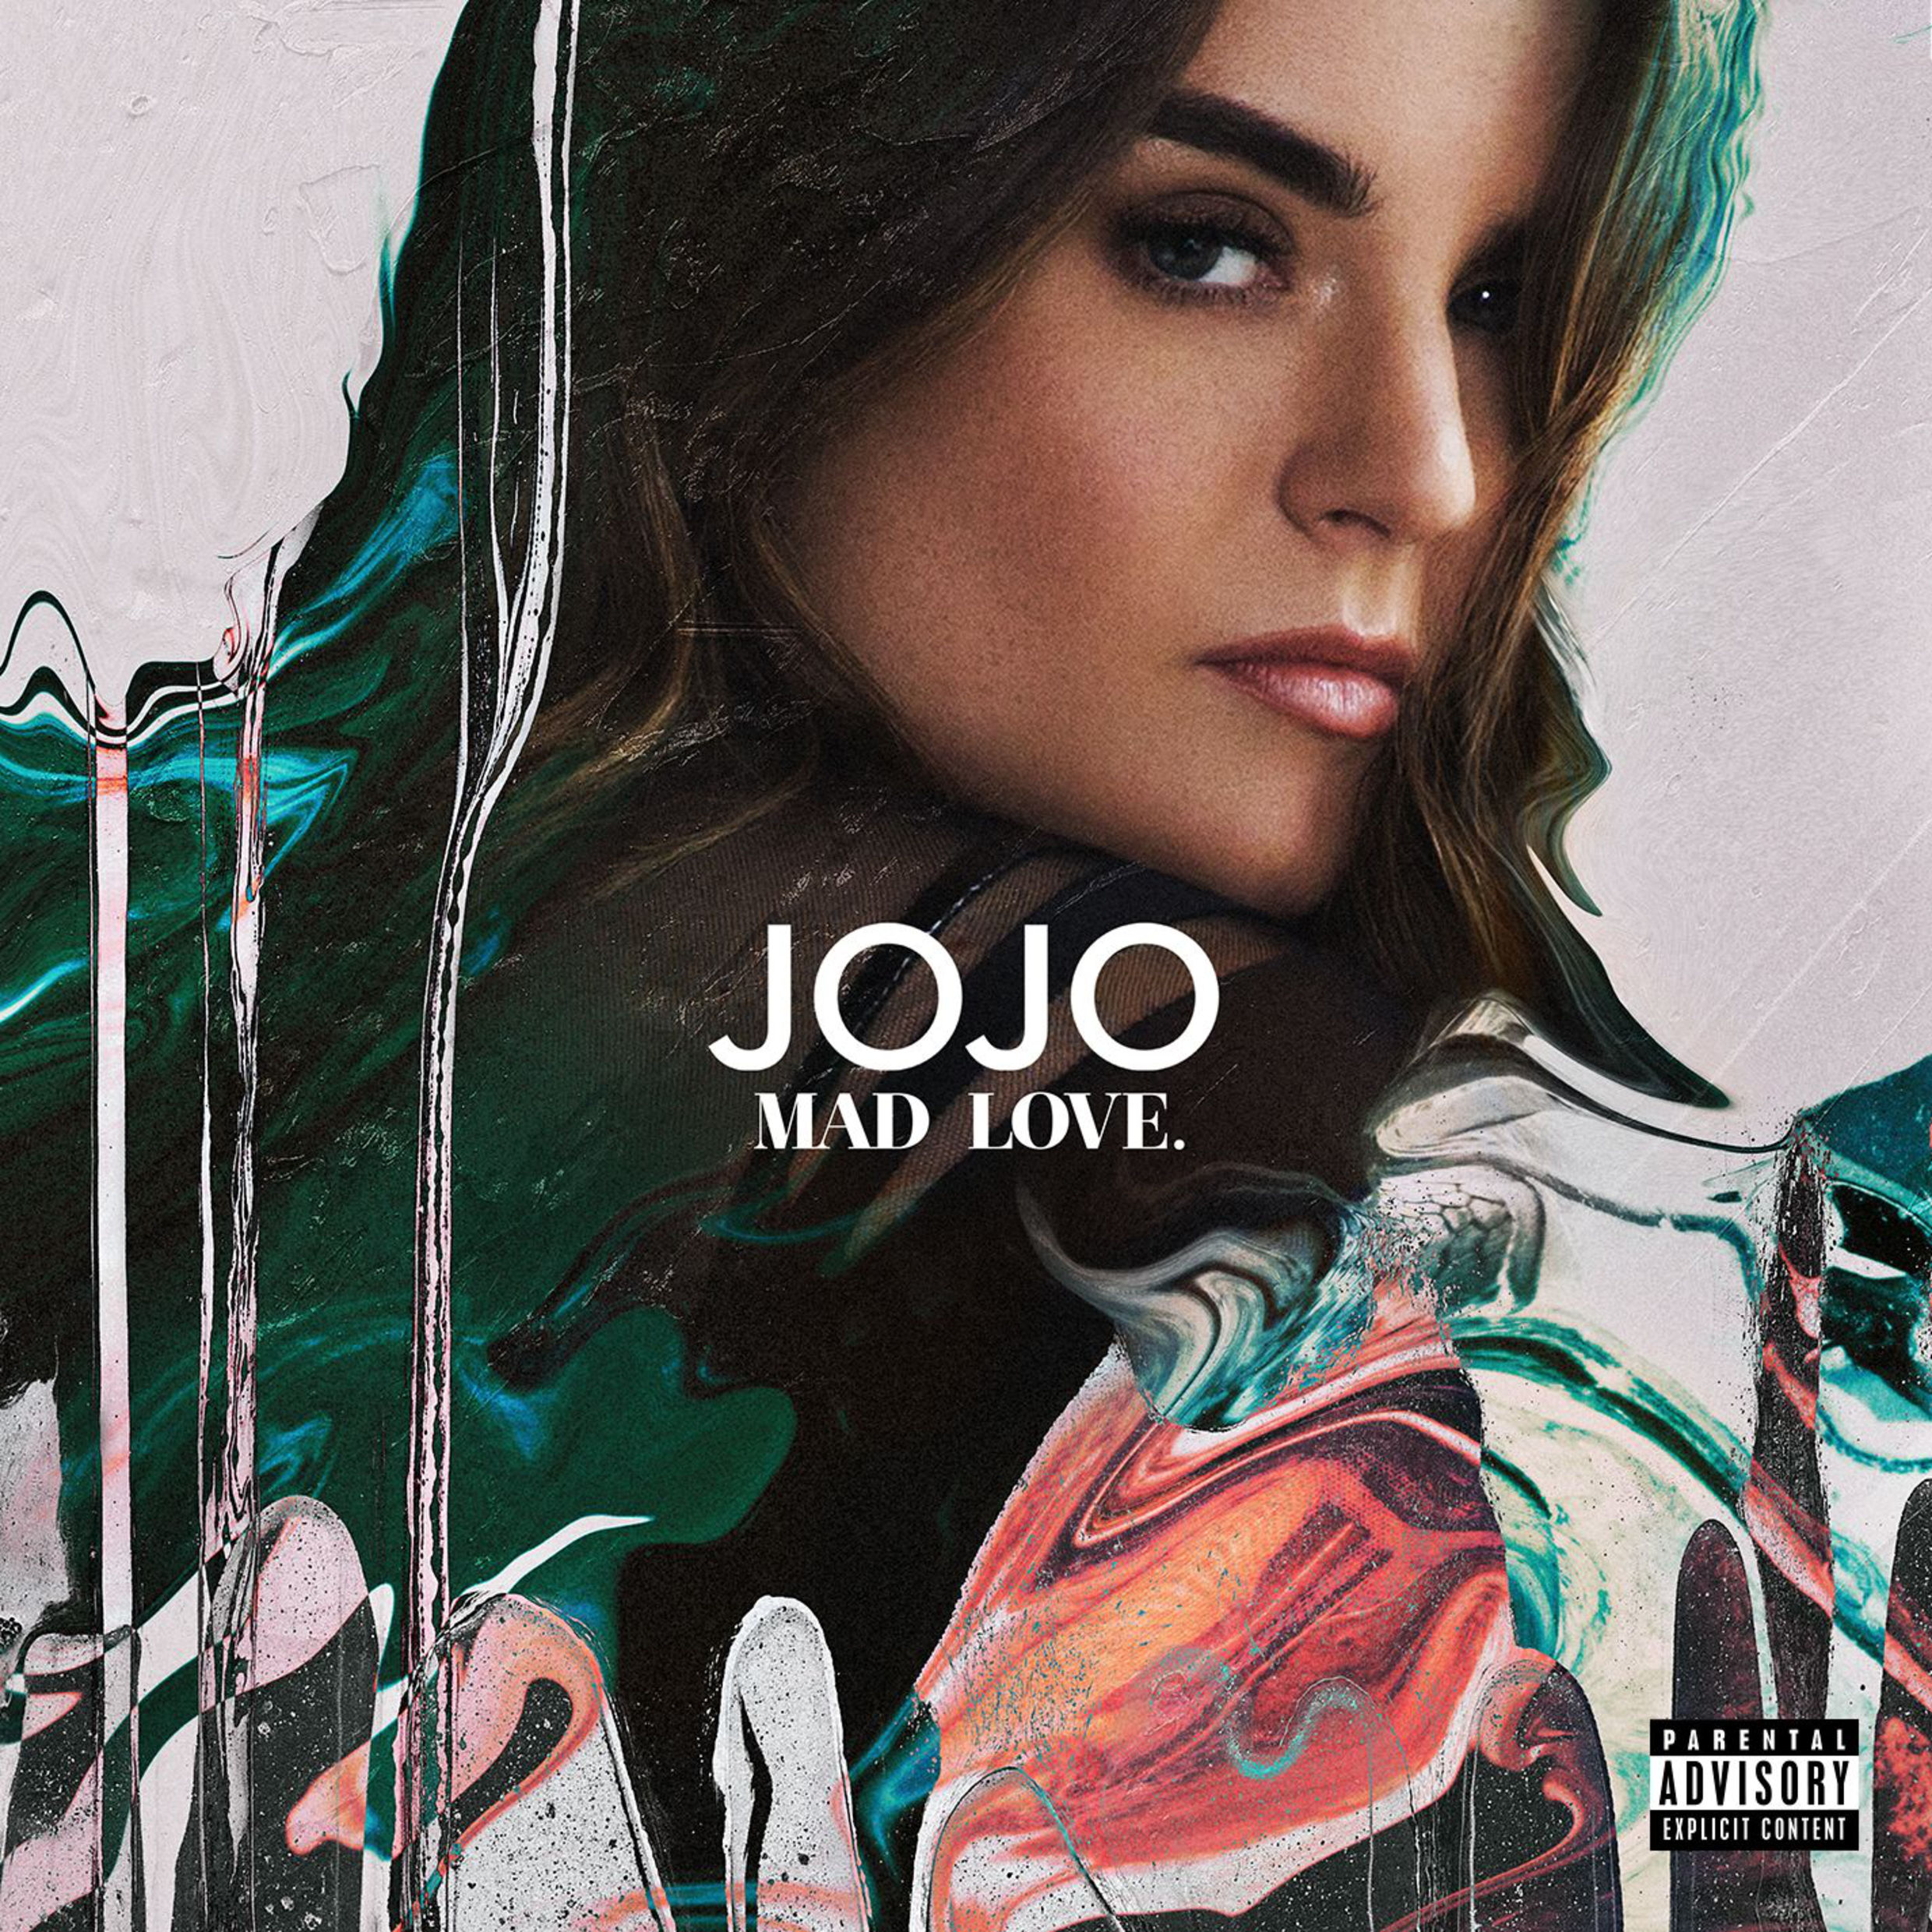 JoJo - Mad Love (album artwork cover)